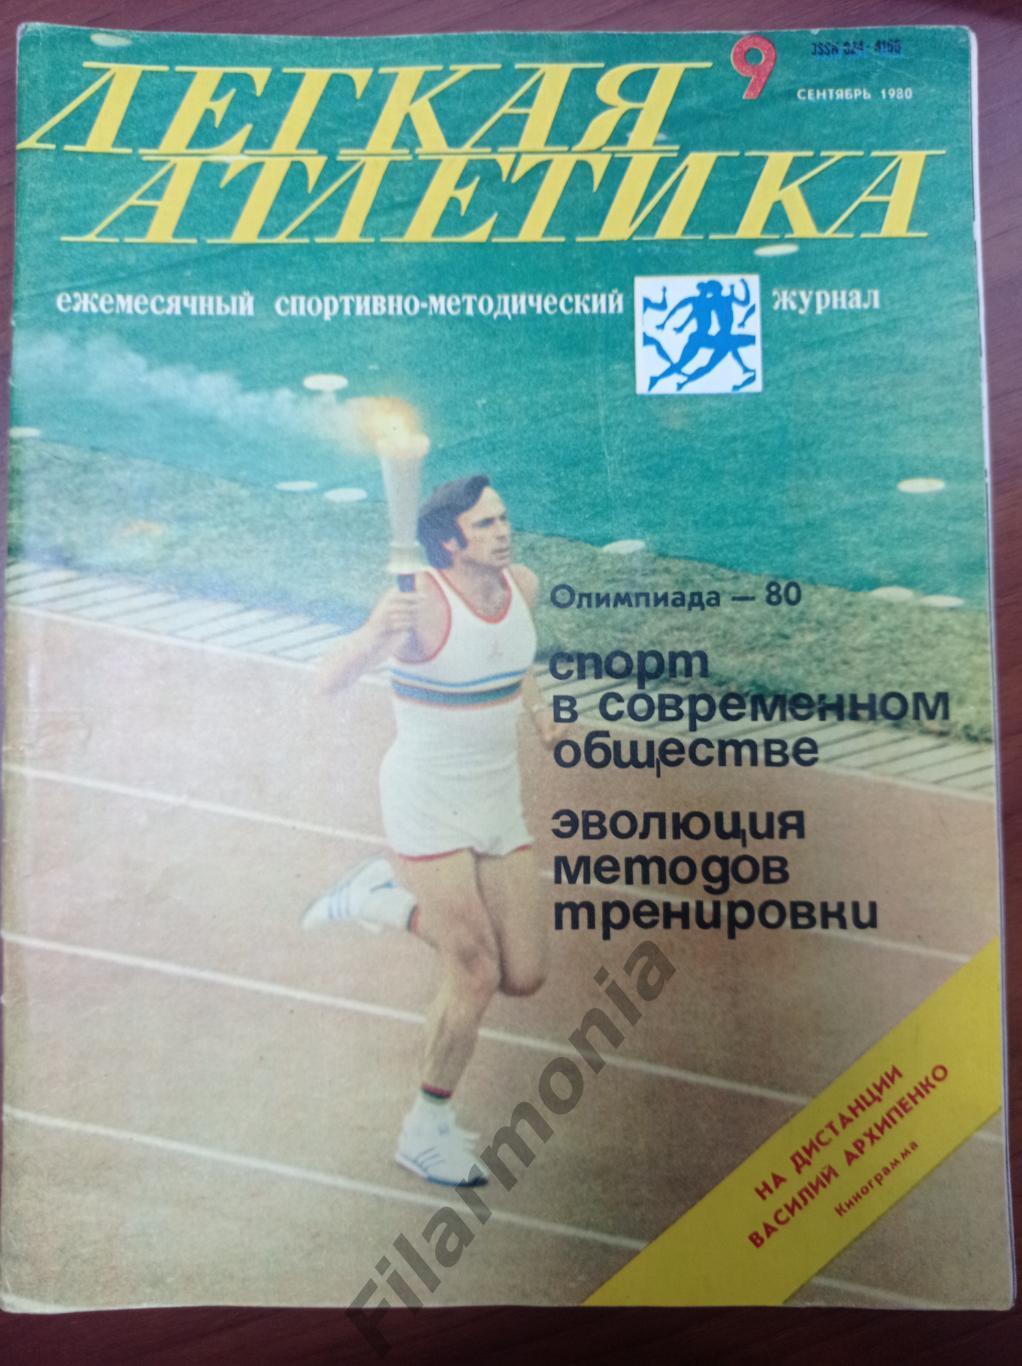 1980 Легкая Атлетика № 9